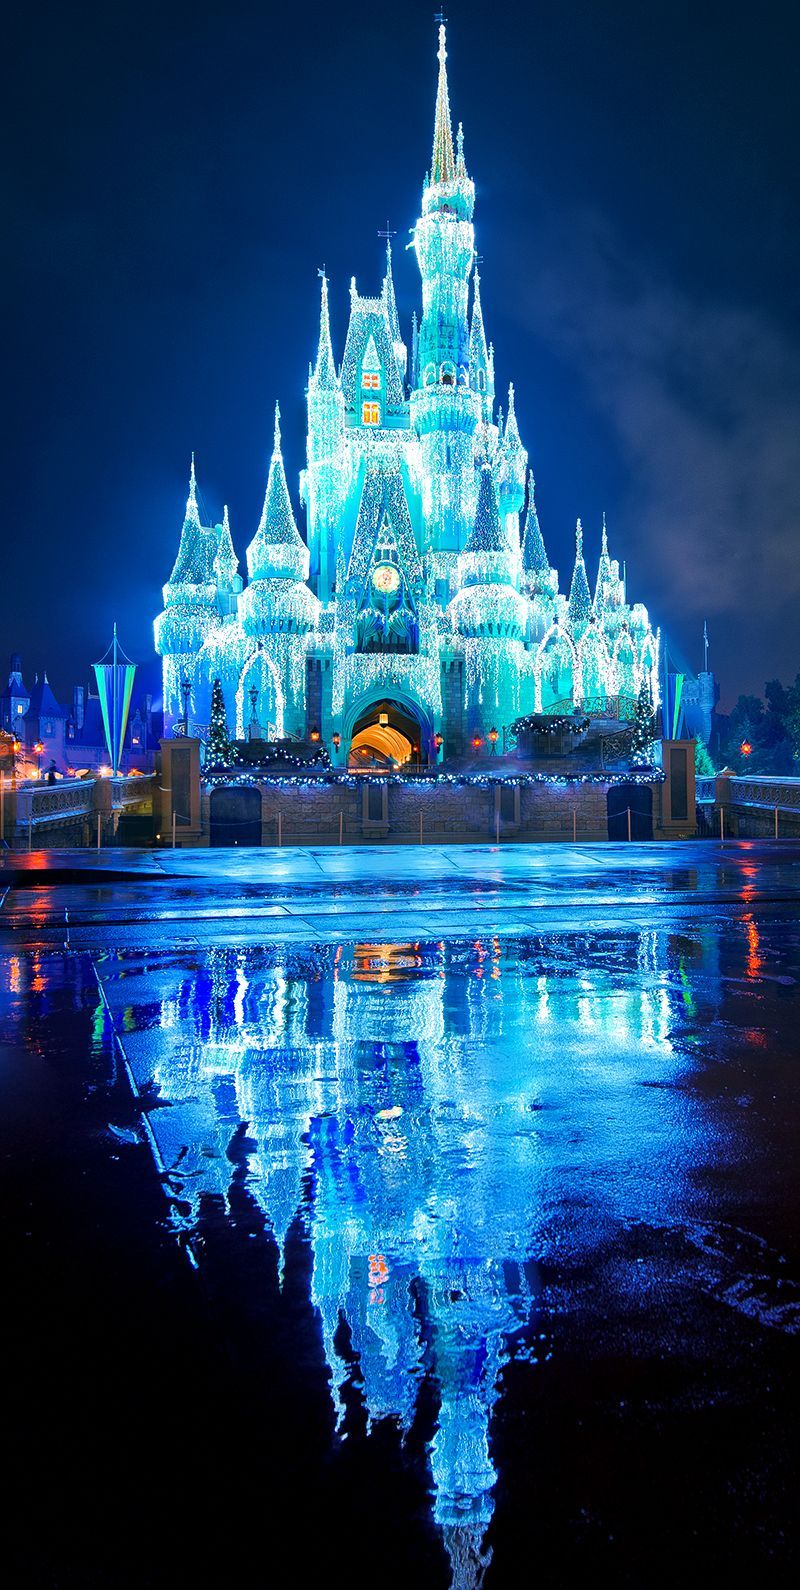 Disney World Christmas Ultimate Guide Tourist Blog. Disney world christmas, Disney world, Disney castle